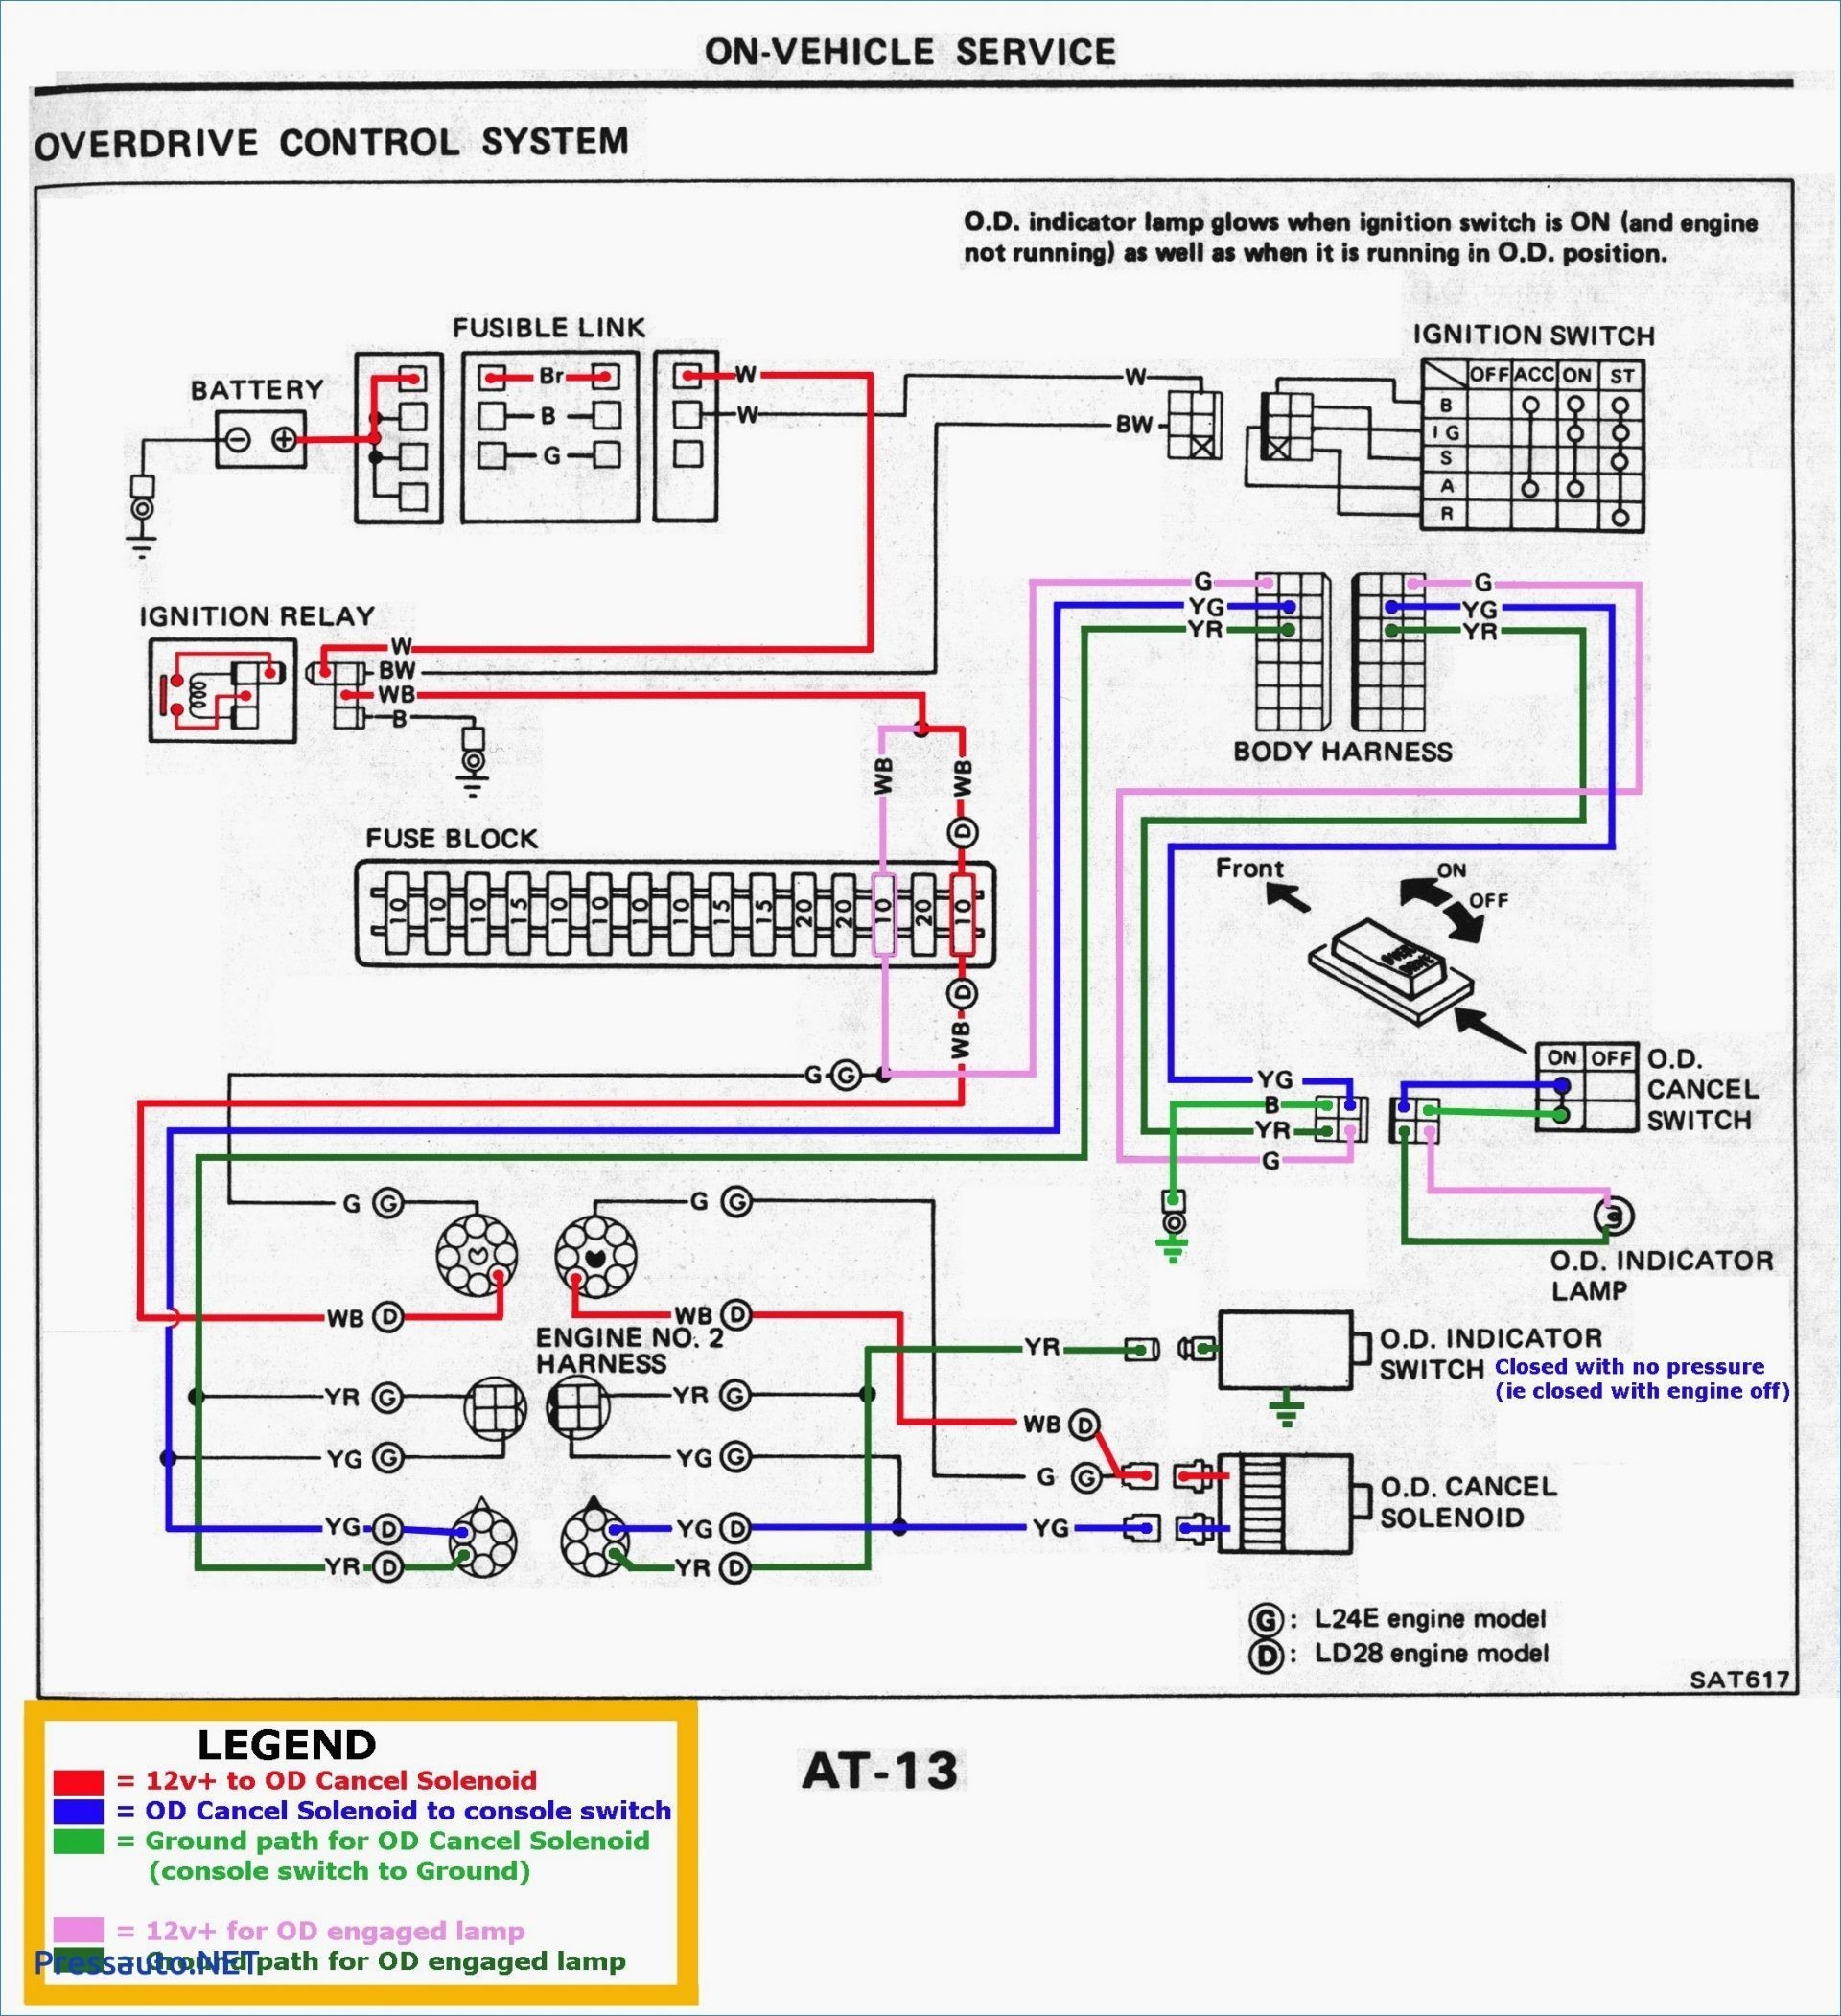 Diagram Of Car Charging System Wiring Diagram Car Charging System Lovely Remote Car Starter Wiring Of Diagram Of Car Charging System